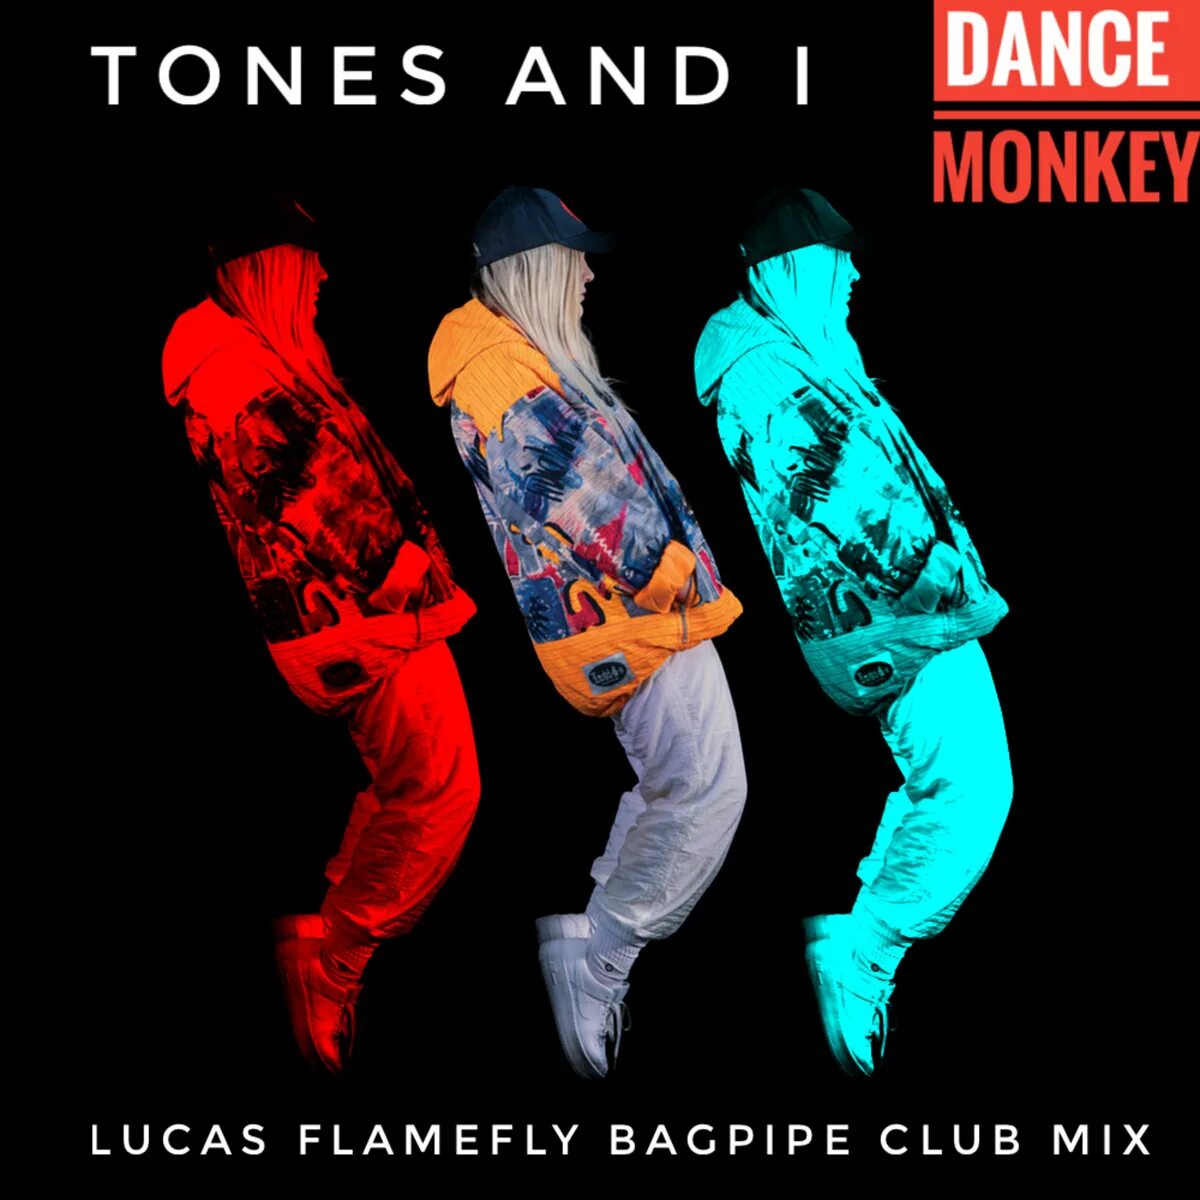 100 tones. Tones and i группа. Tones Dance Monkey. Ж͓е͓н͓с͓ М͓О͓Н͓К͓Е͓Й͓. Tones and Dance Monkey исполнитель.